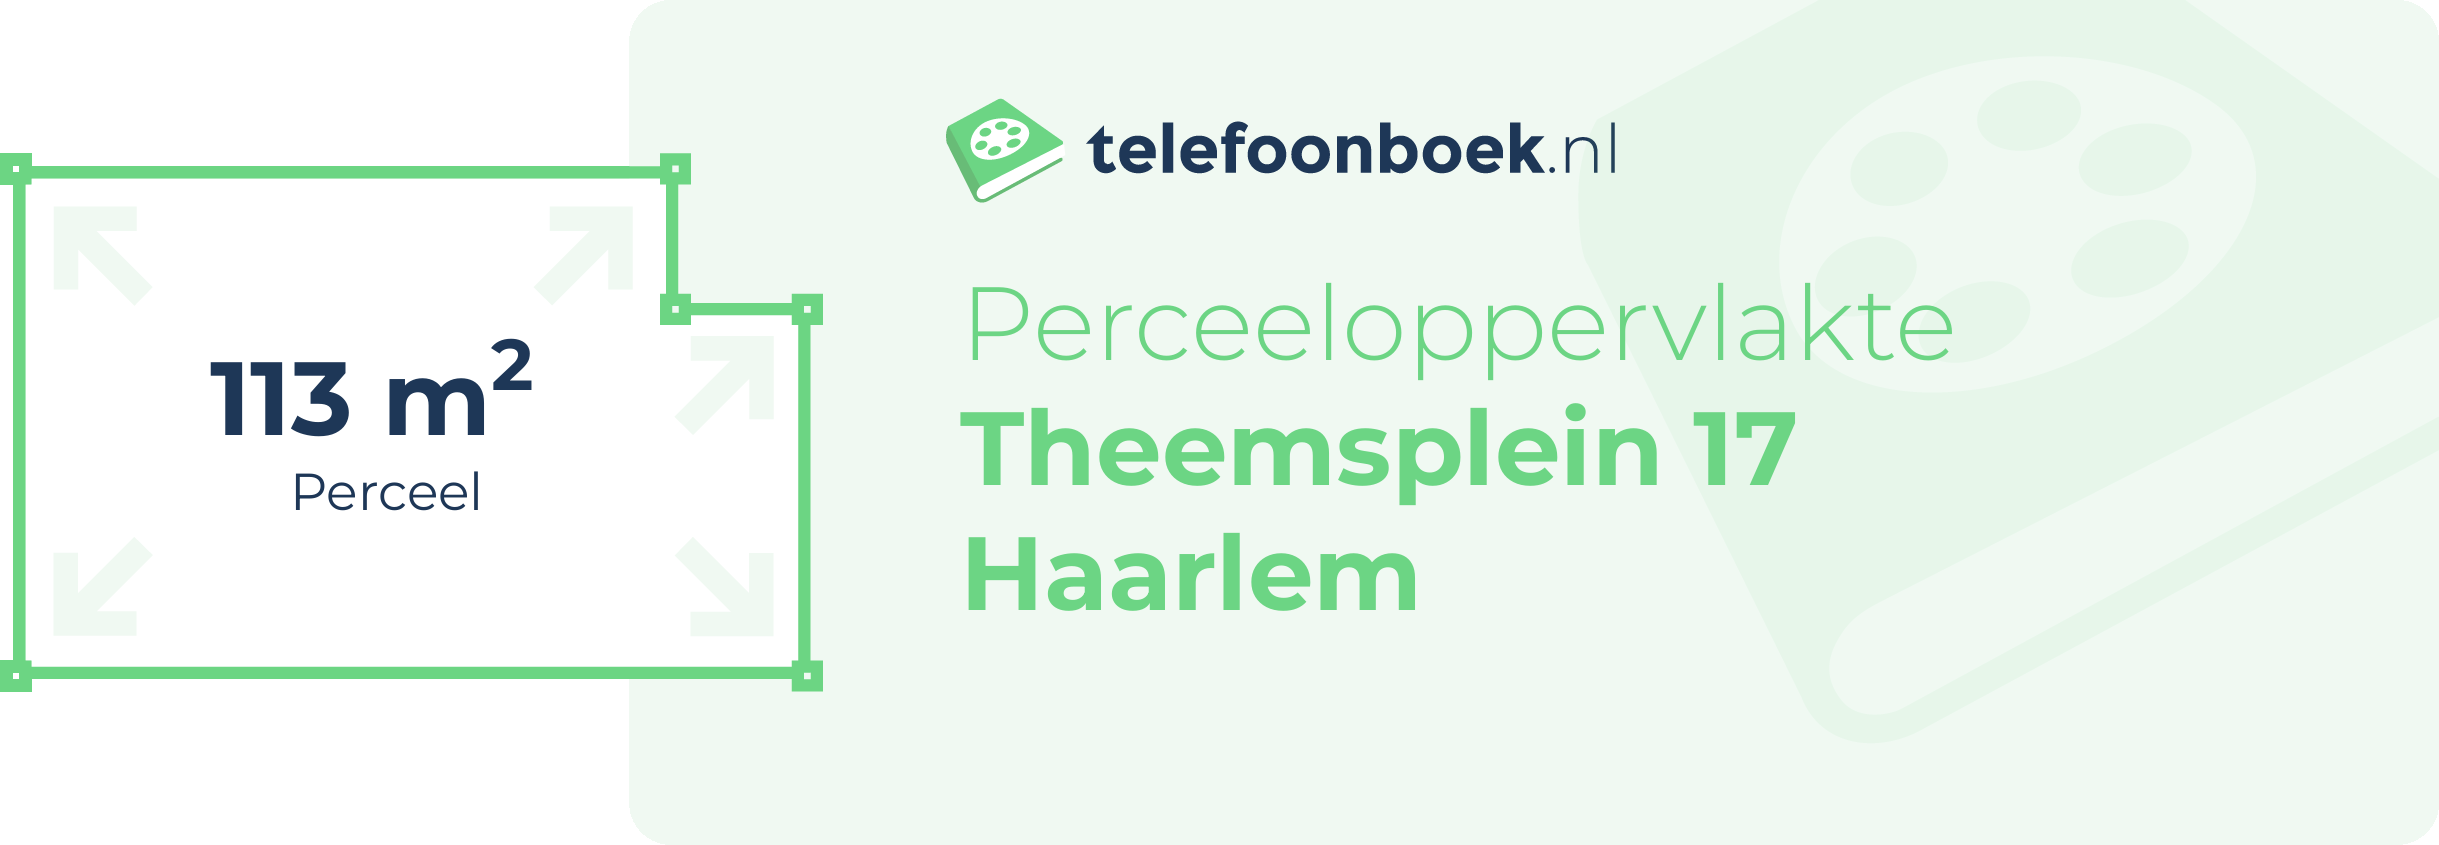 Perceeloppervlakte Theemsplein 17 Haarlem